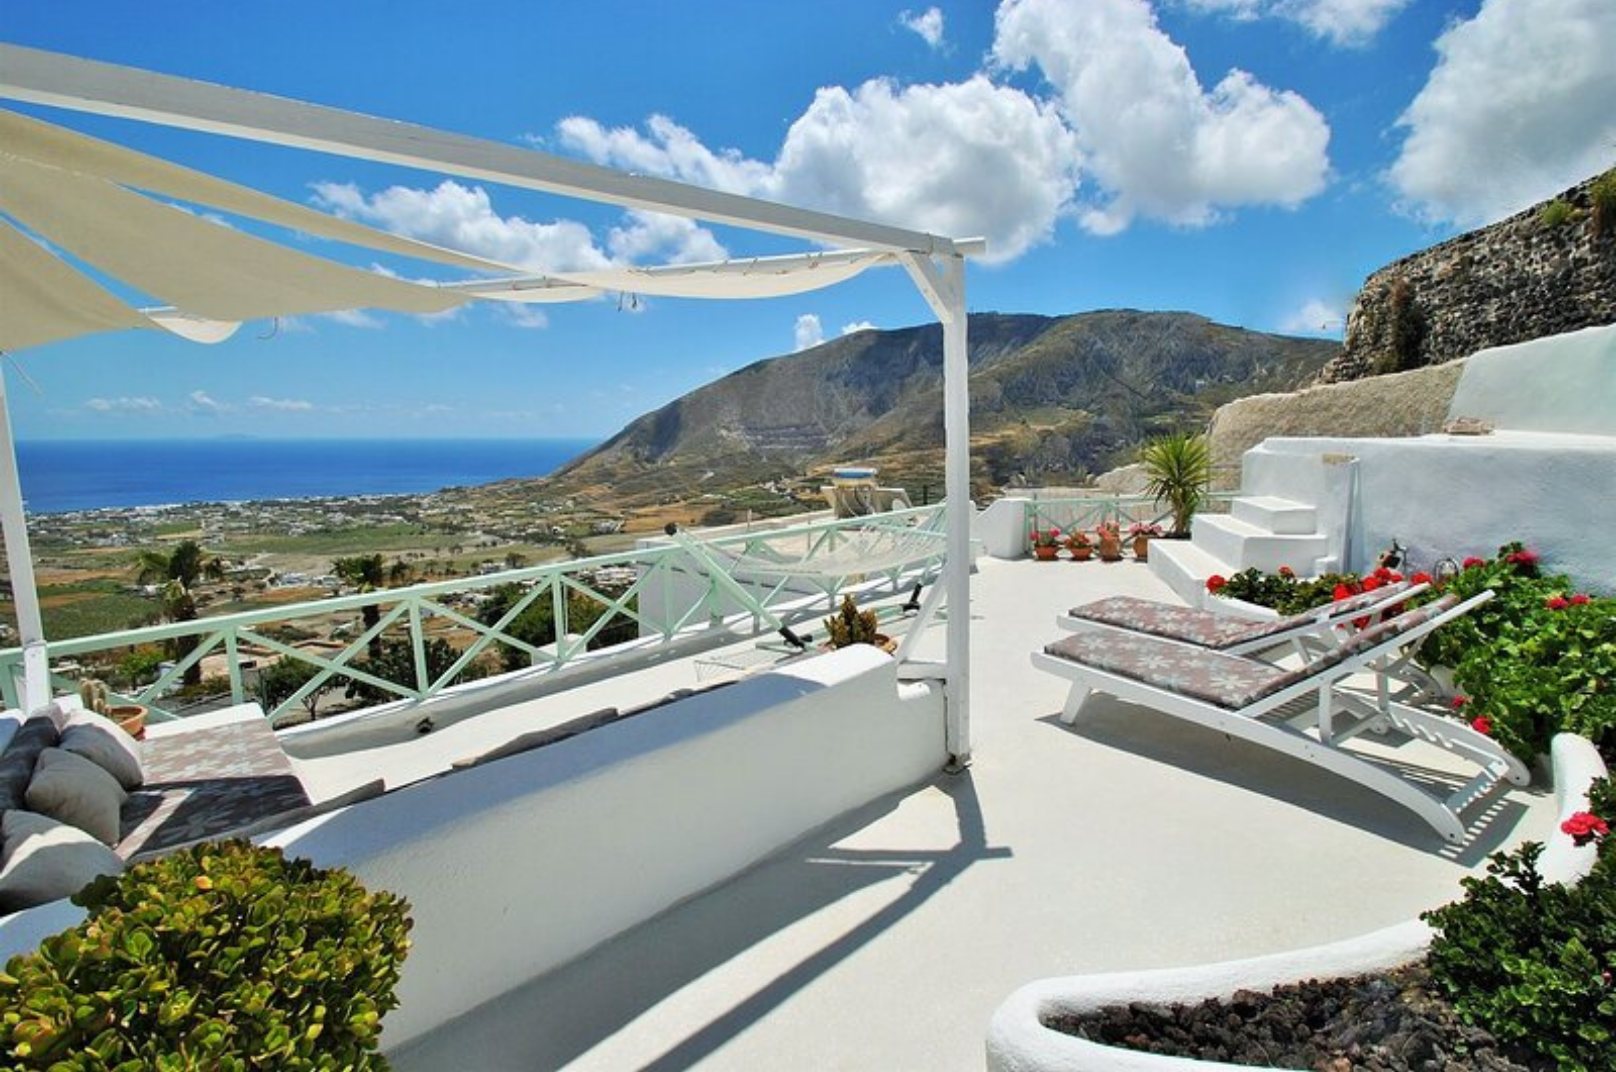 The Best Airbnbs in Santorini, Greece